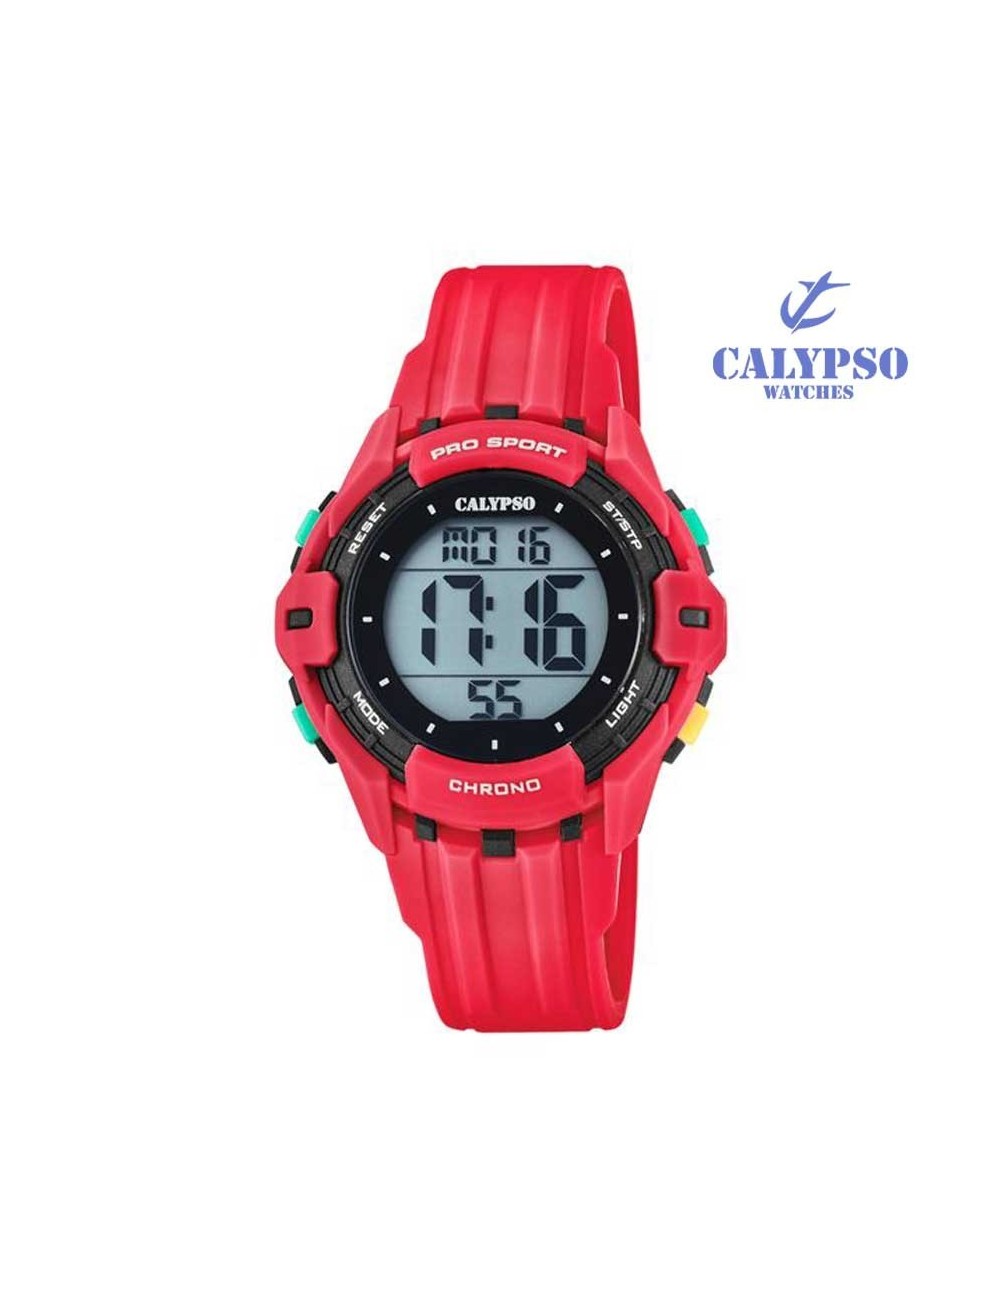 Comprar barato Reloj Calipso hombre-niño analógico sport 3 agujas K5778/2 -  Envios gratuitos